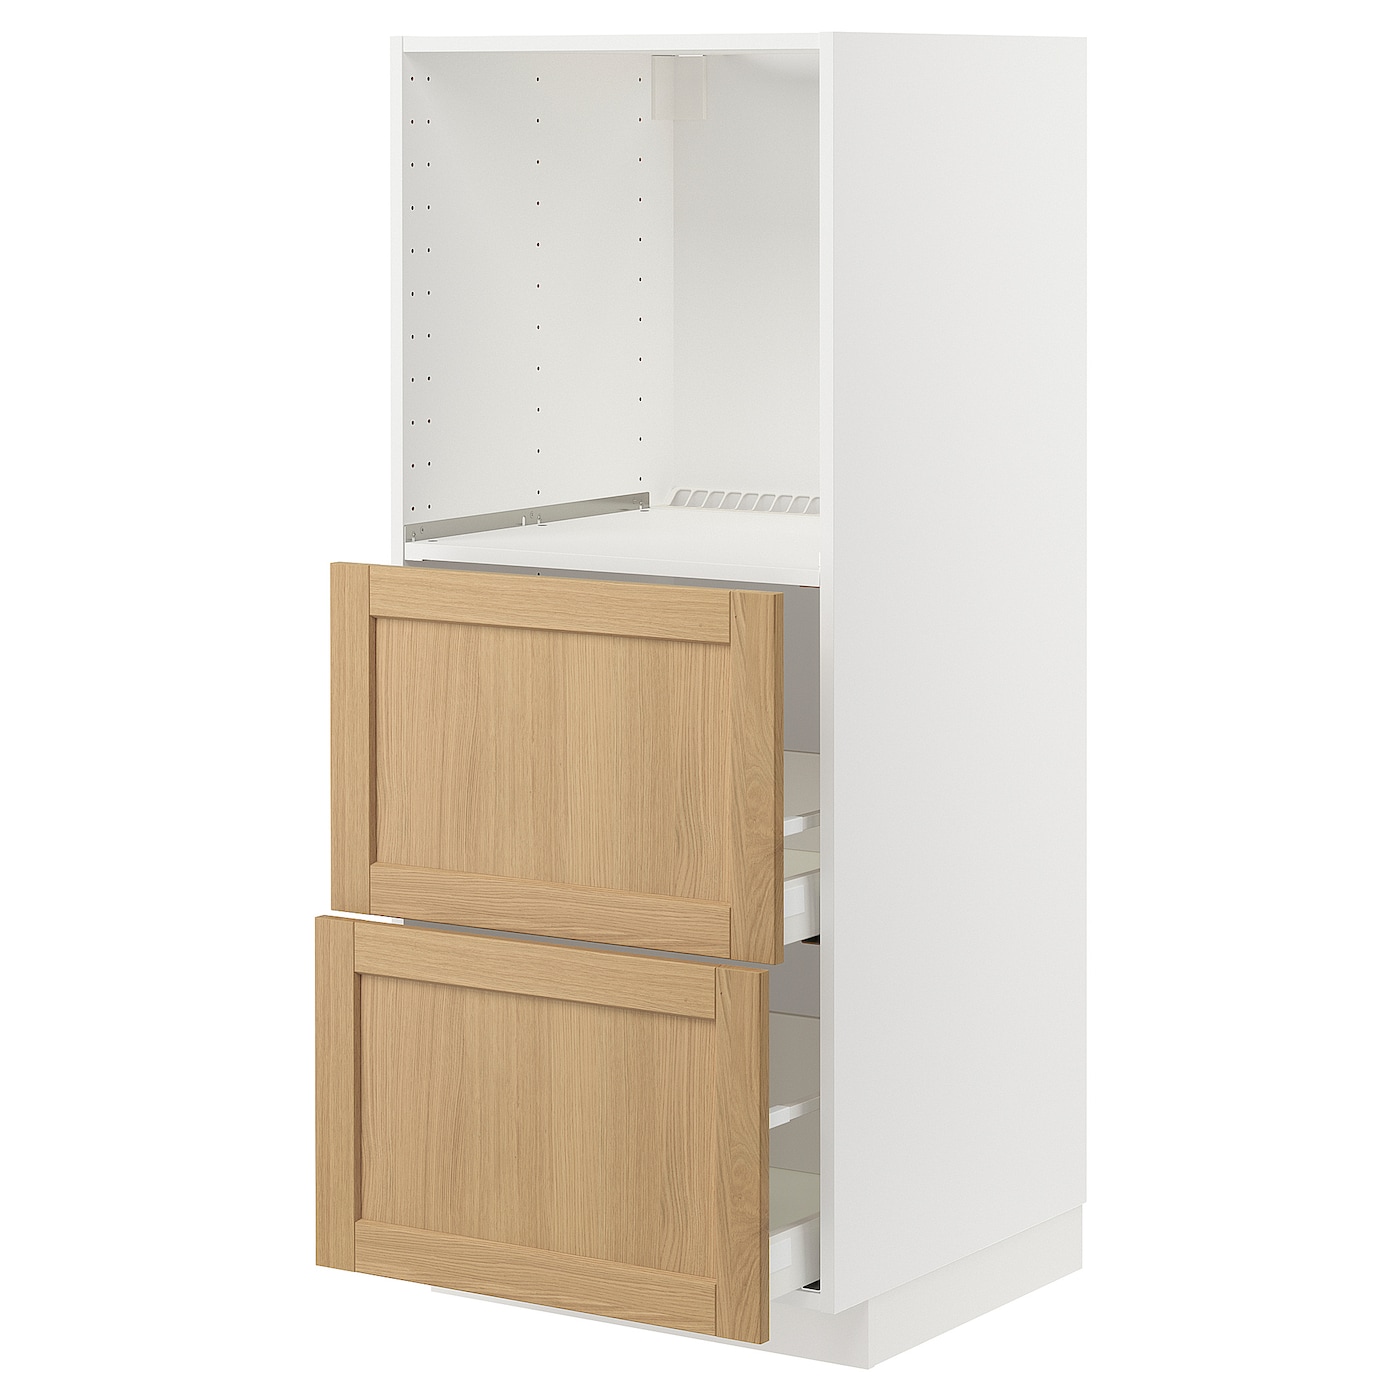 Навесной шкаф - METOD / MAXIMERA IKEA/ МЕТОД/ МАКСИМЕРА ИКЕА,  60х60х140 см, белый/ под беленый дуб